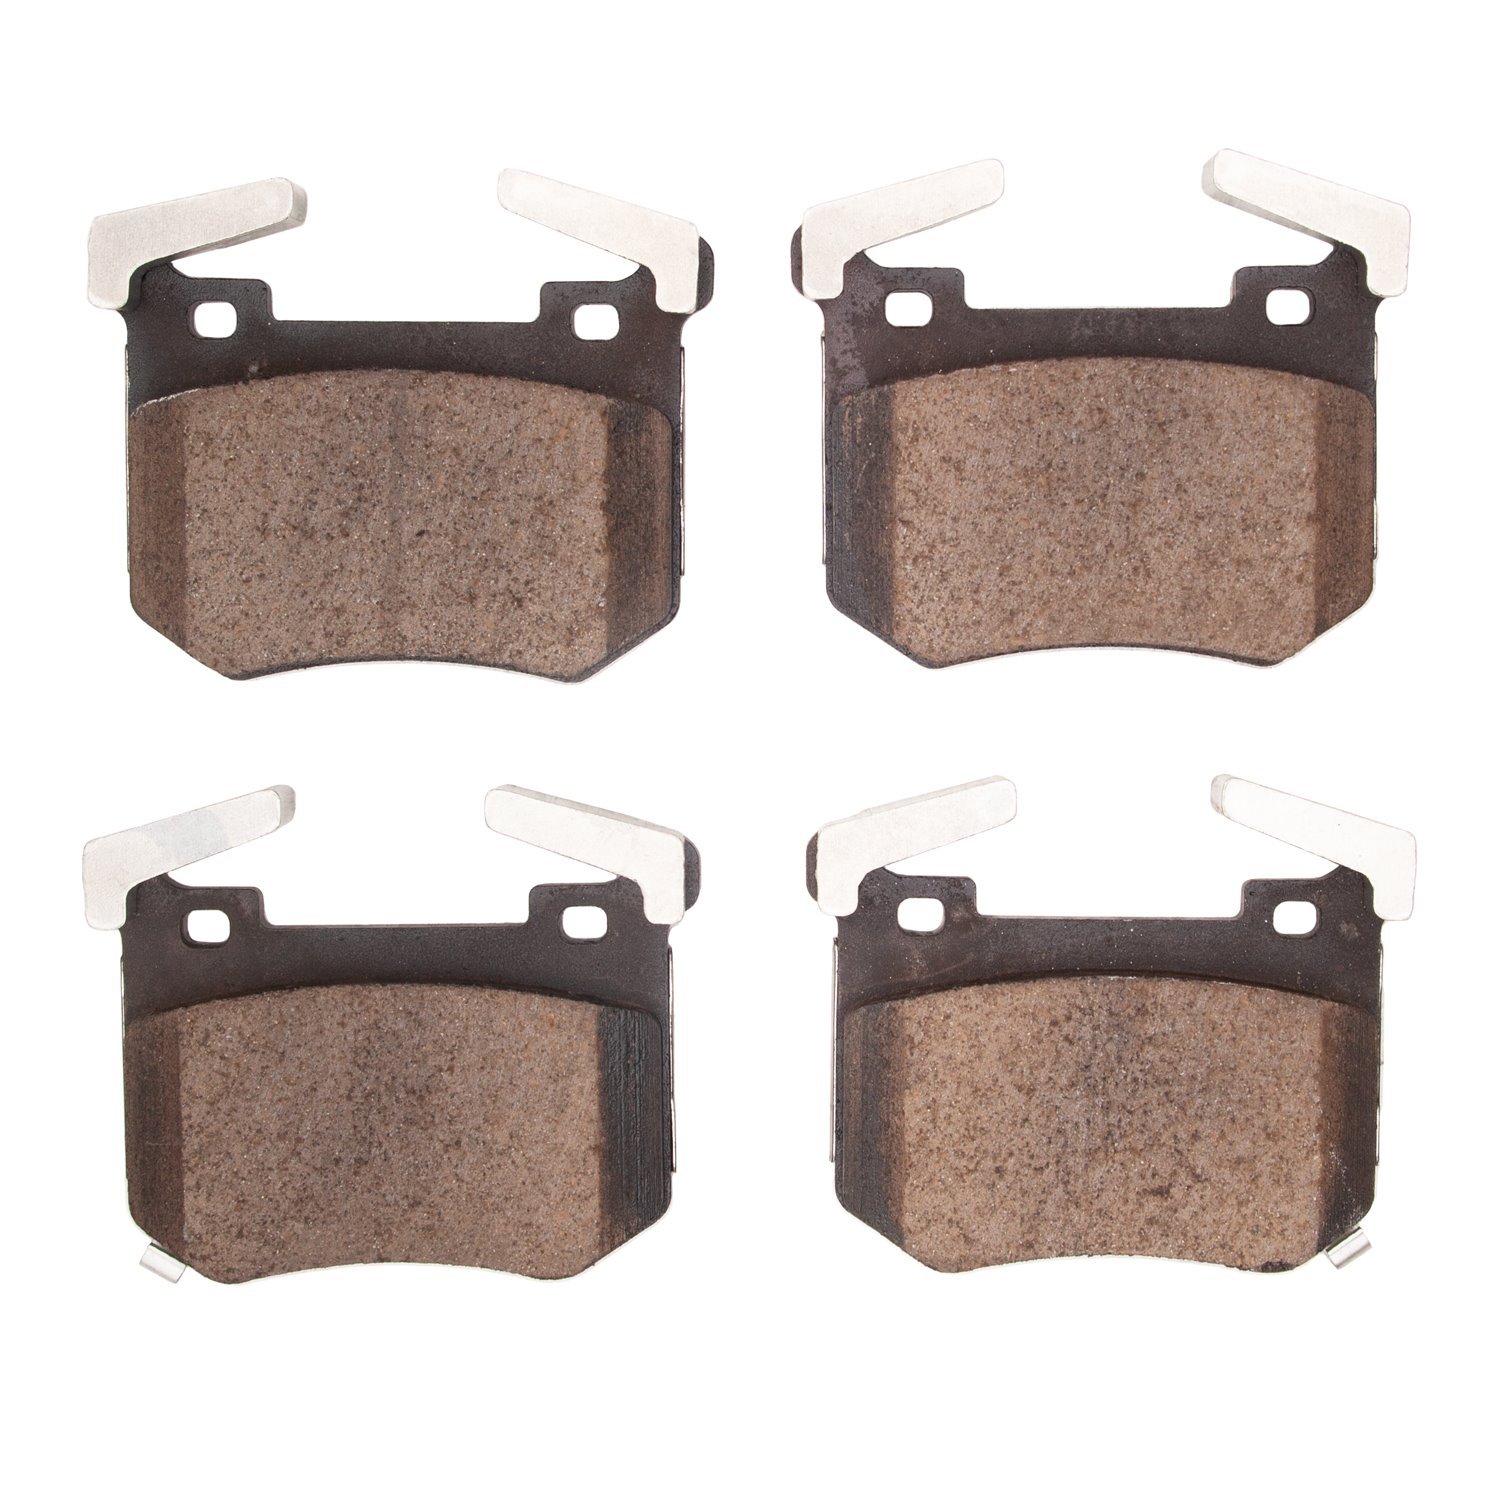 1310-2144-00 3000-Series Ceramic Brake Pads, Fits Select Kia/Hyundai/Genesis, Position: Rear